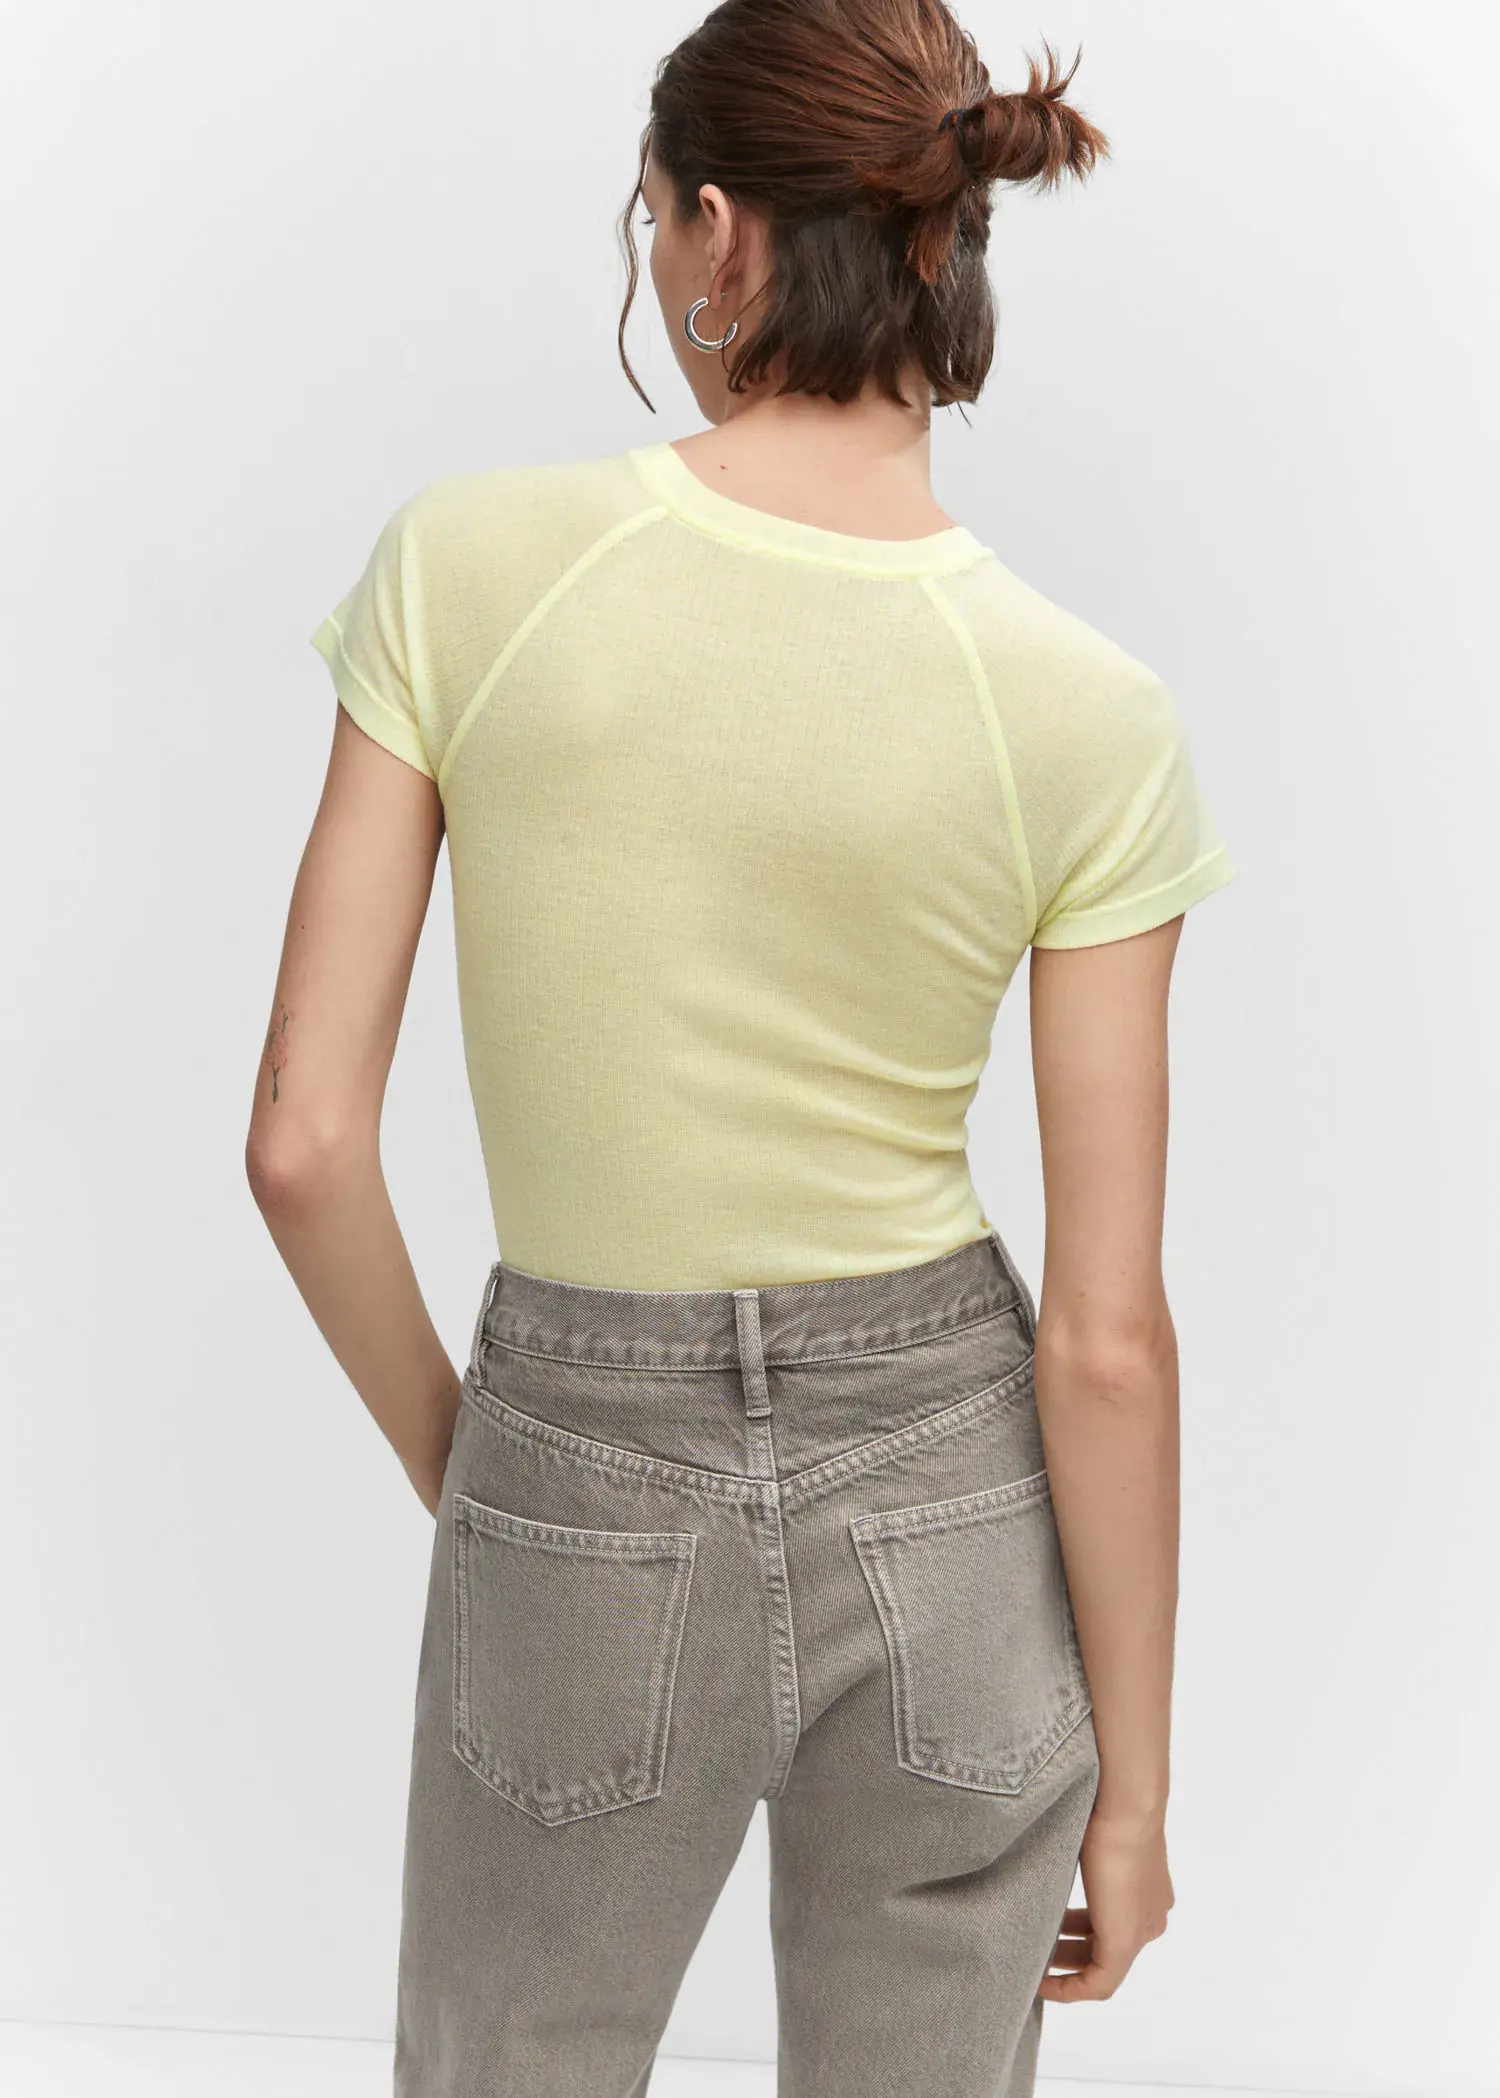 Mango Seam detail T-shirt. a woman in a yellow shirt and gray shorts. 